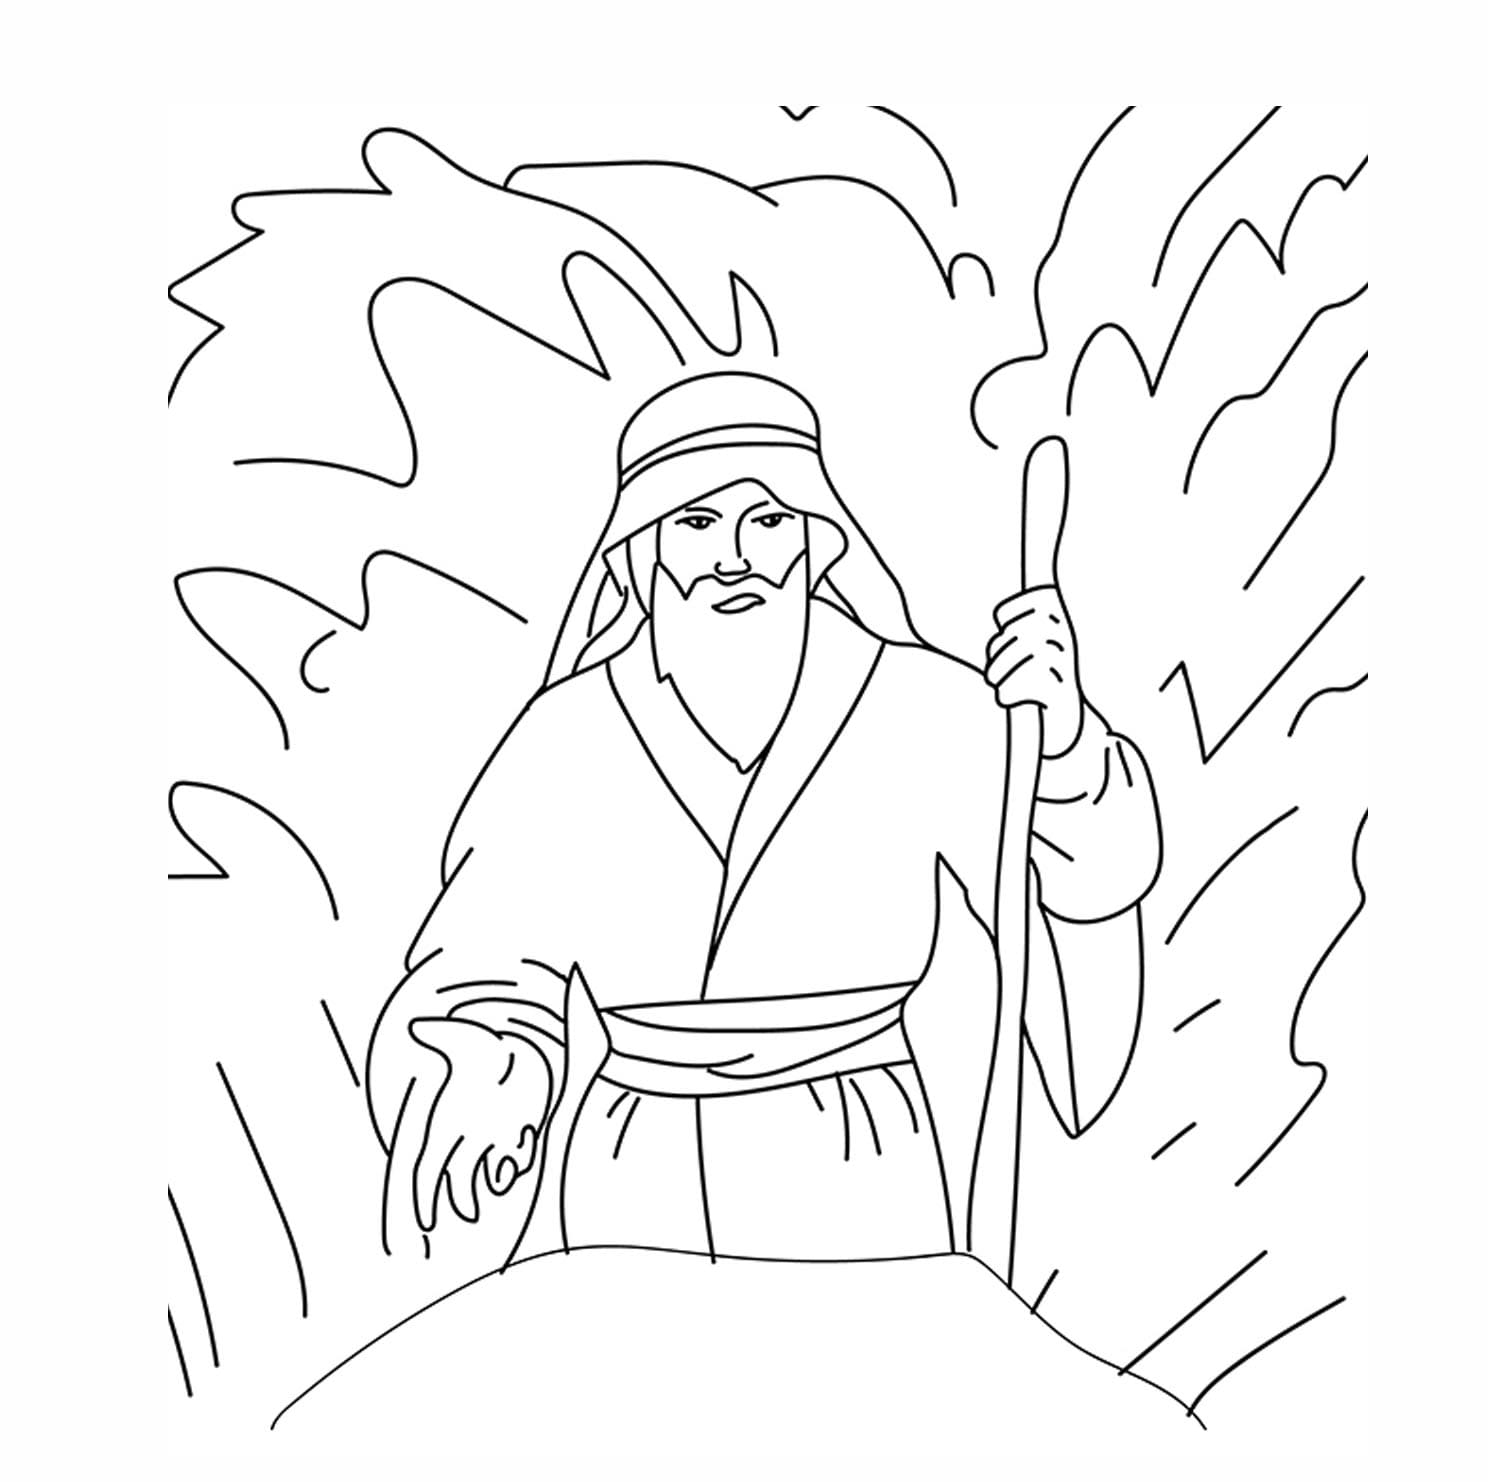 Dibujo de Moisés